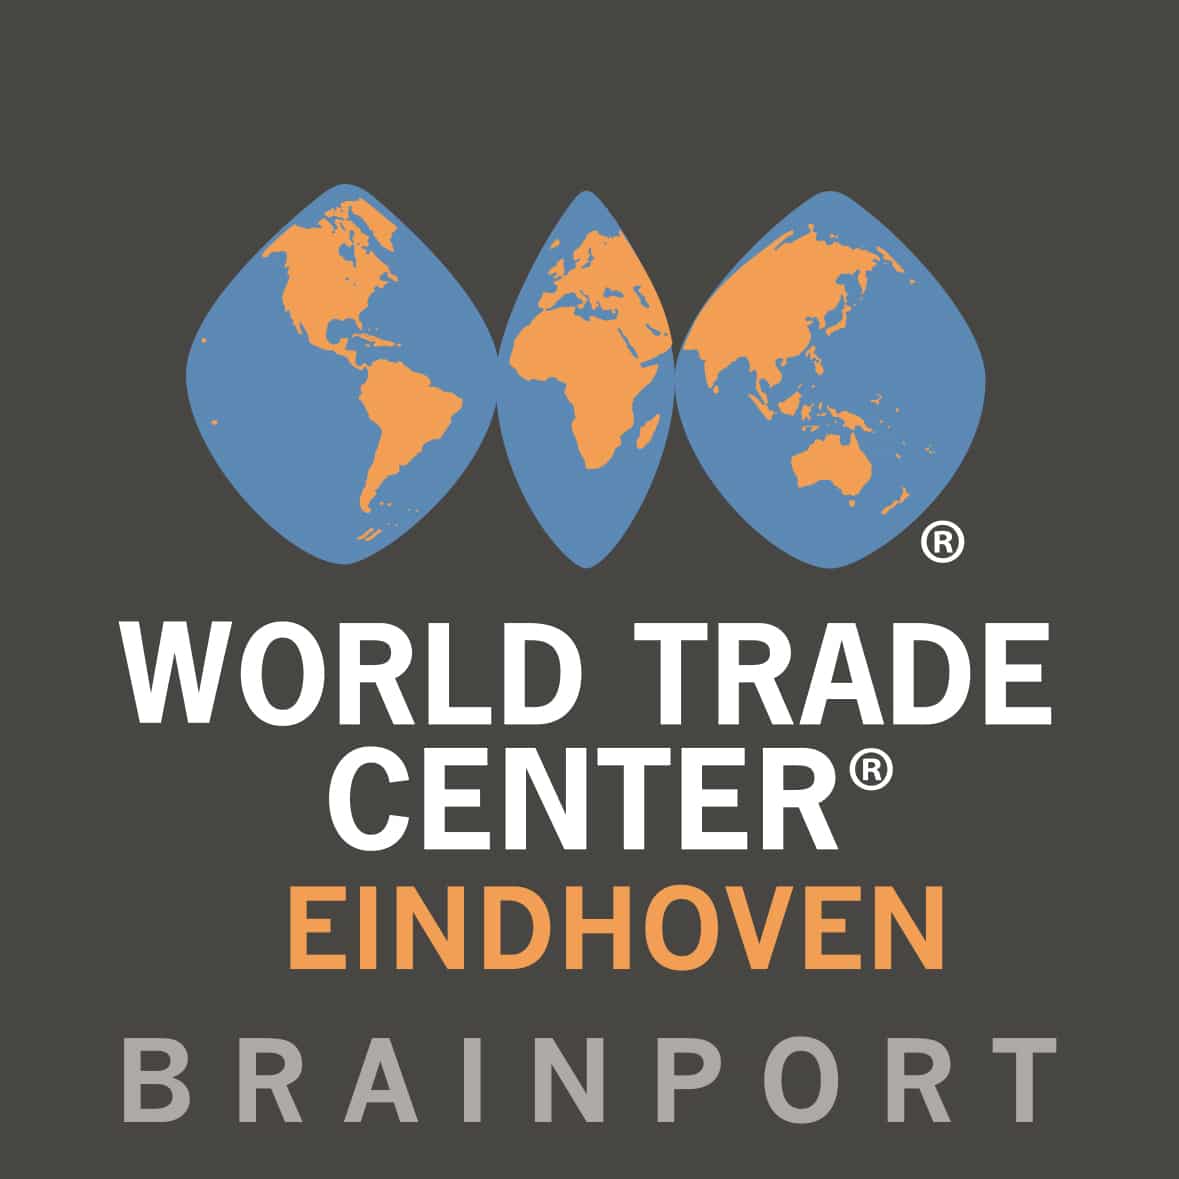 wtce_brainport_logo